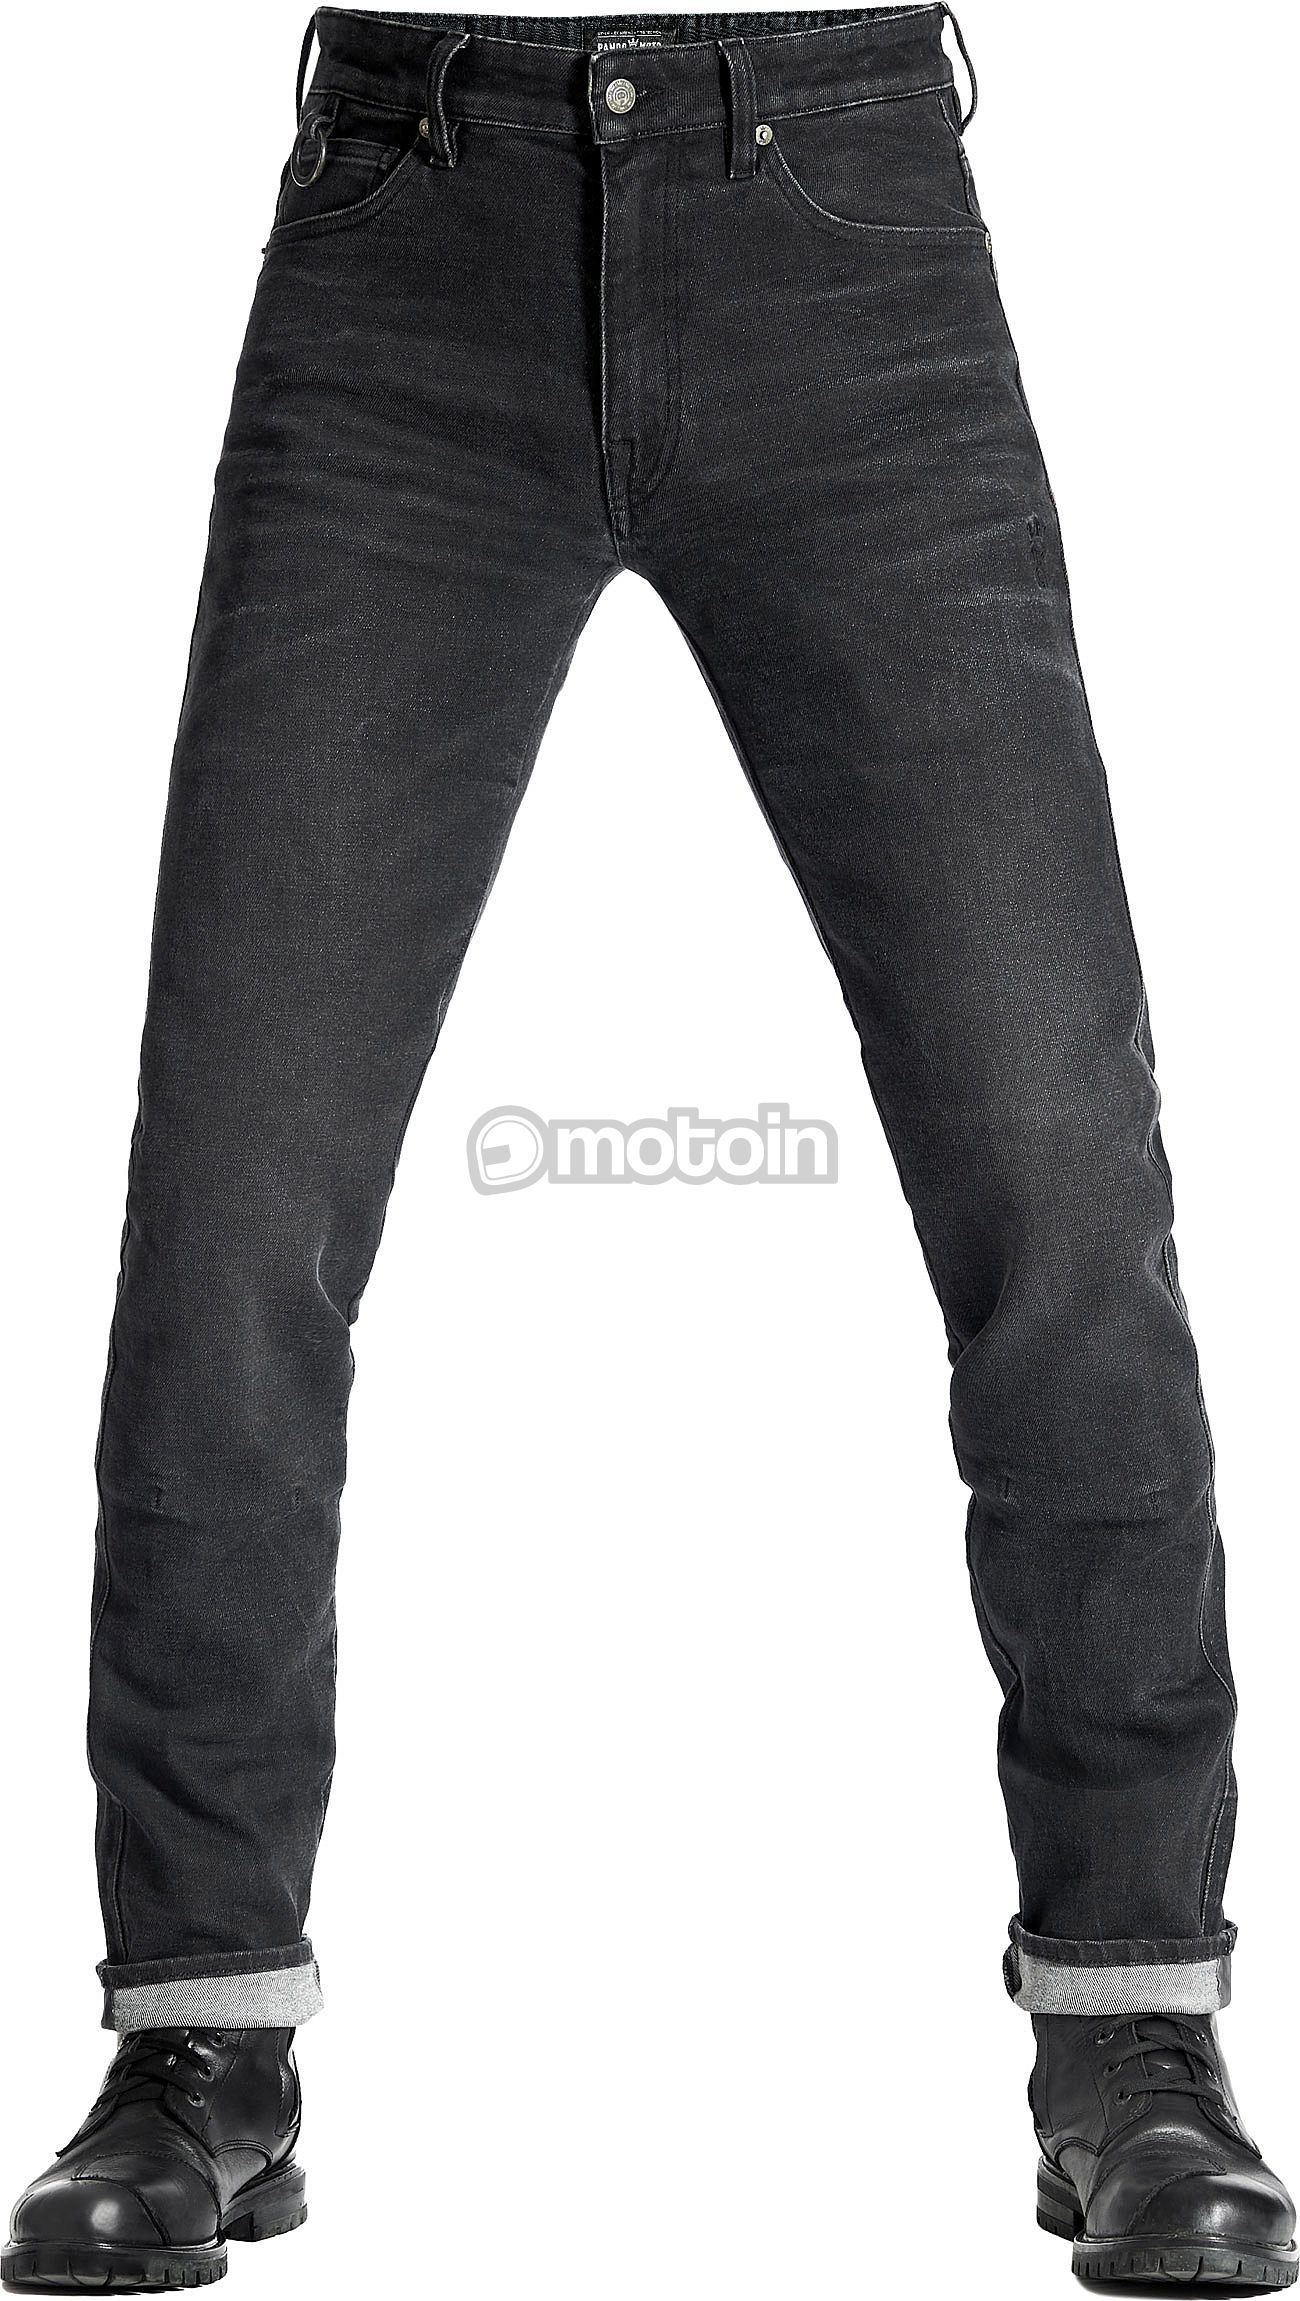 Pando Moto Robby Arm 01, Jeans